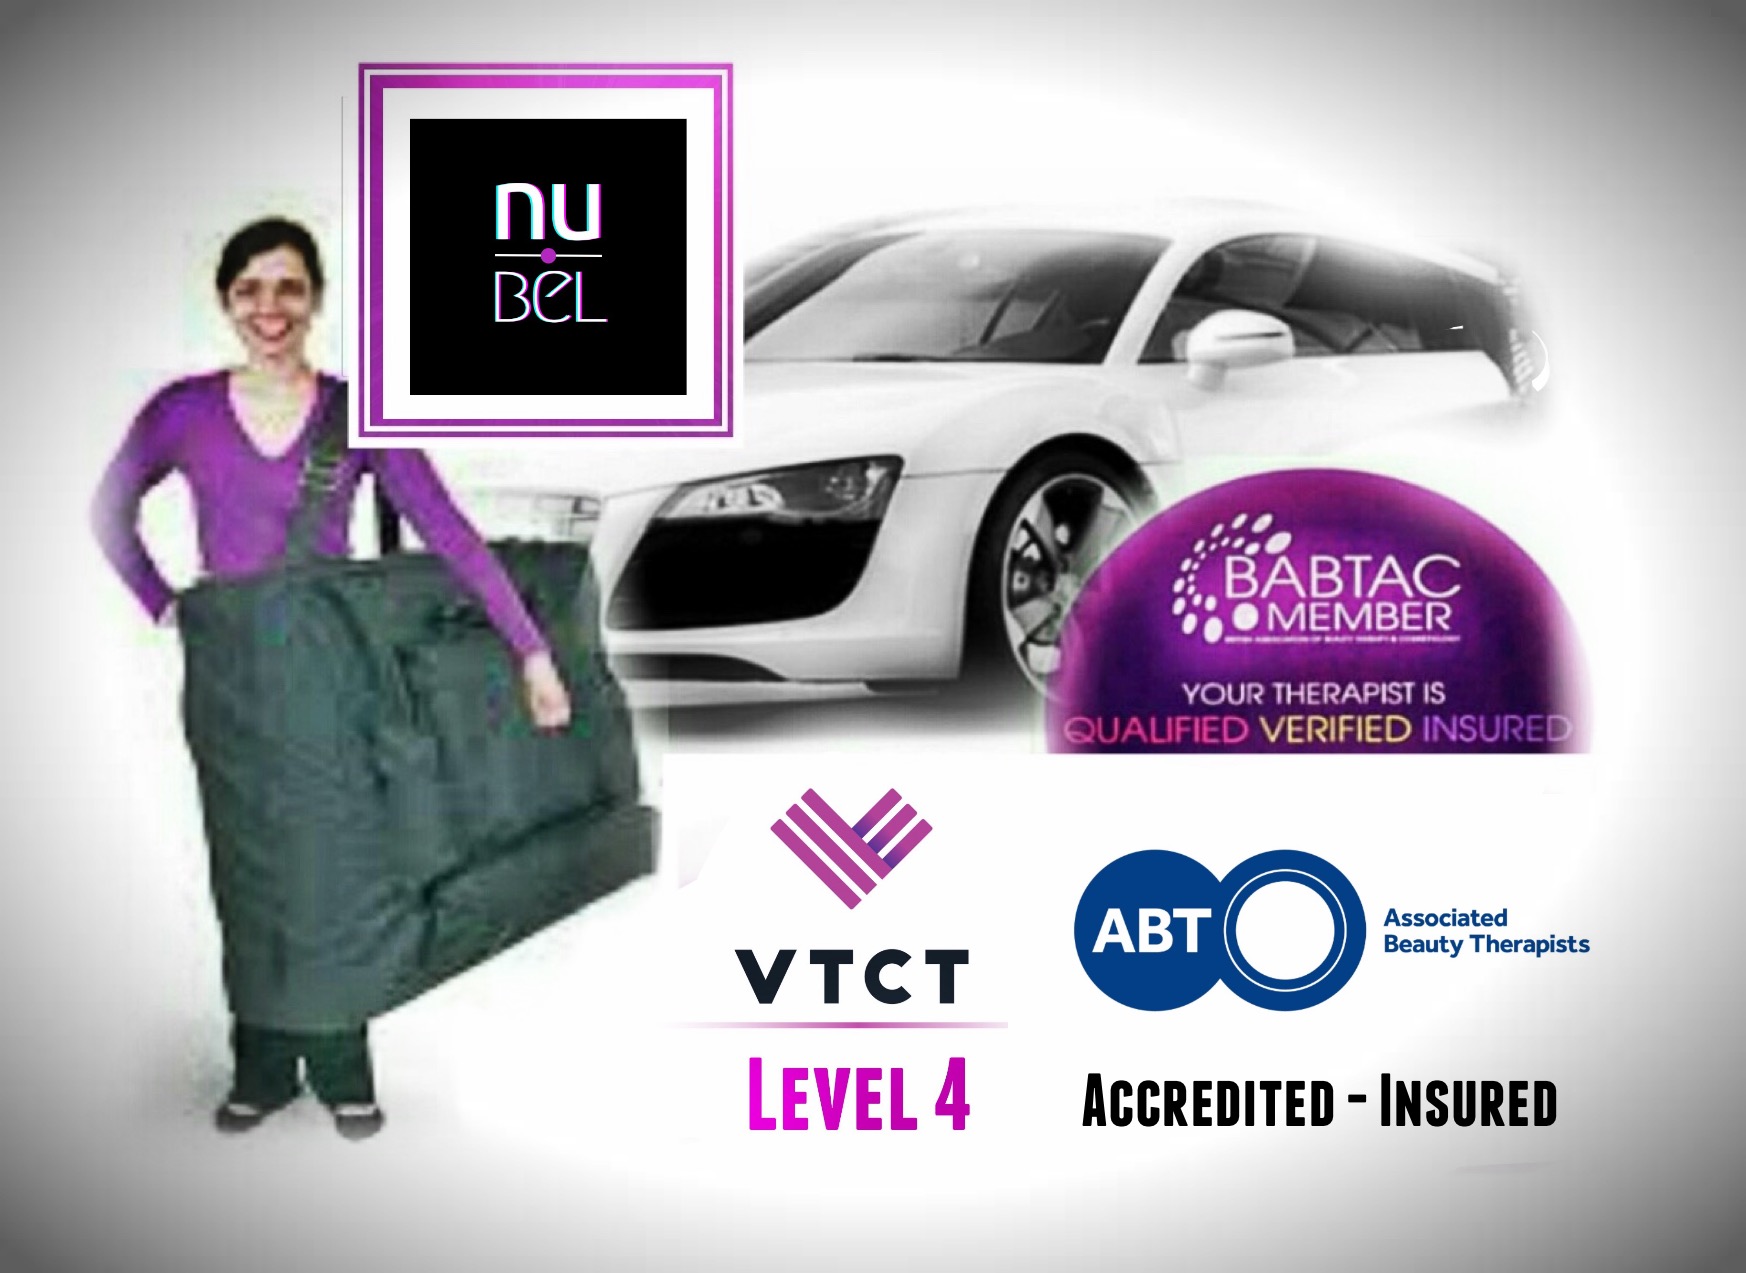 NUBEL level 4 VTCT accredited ABT insured